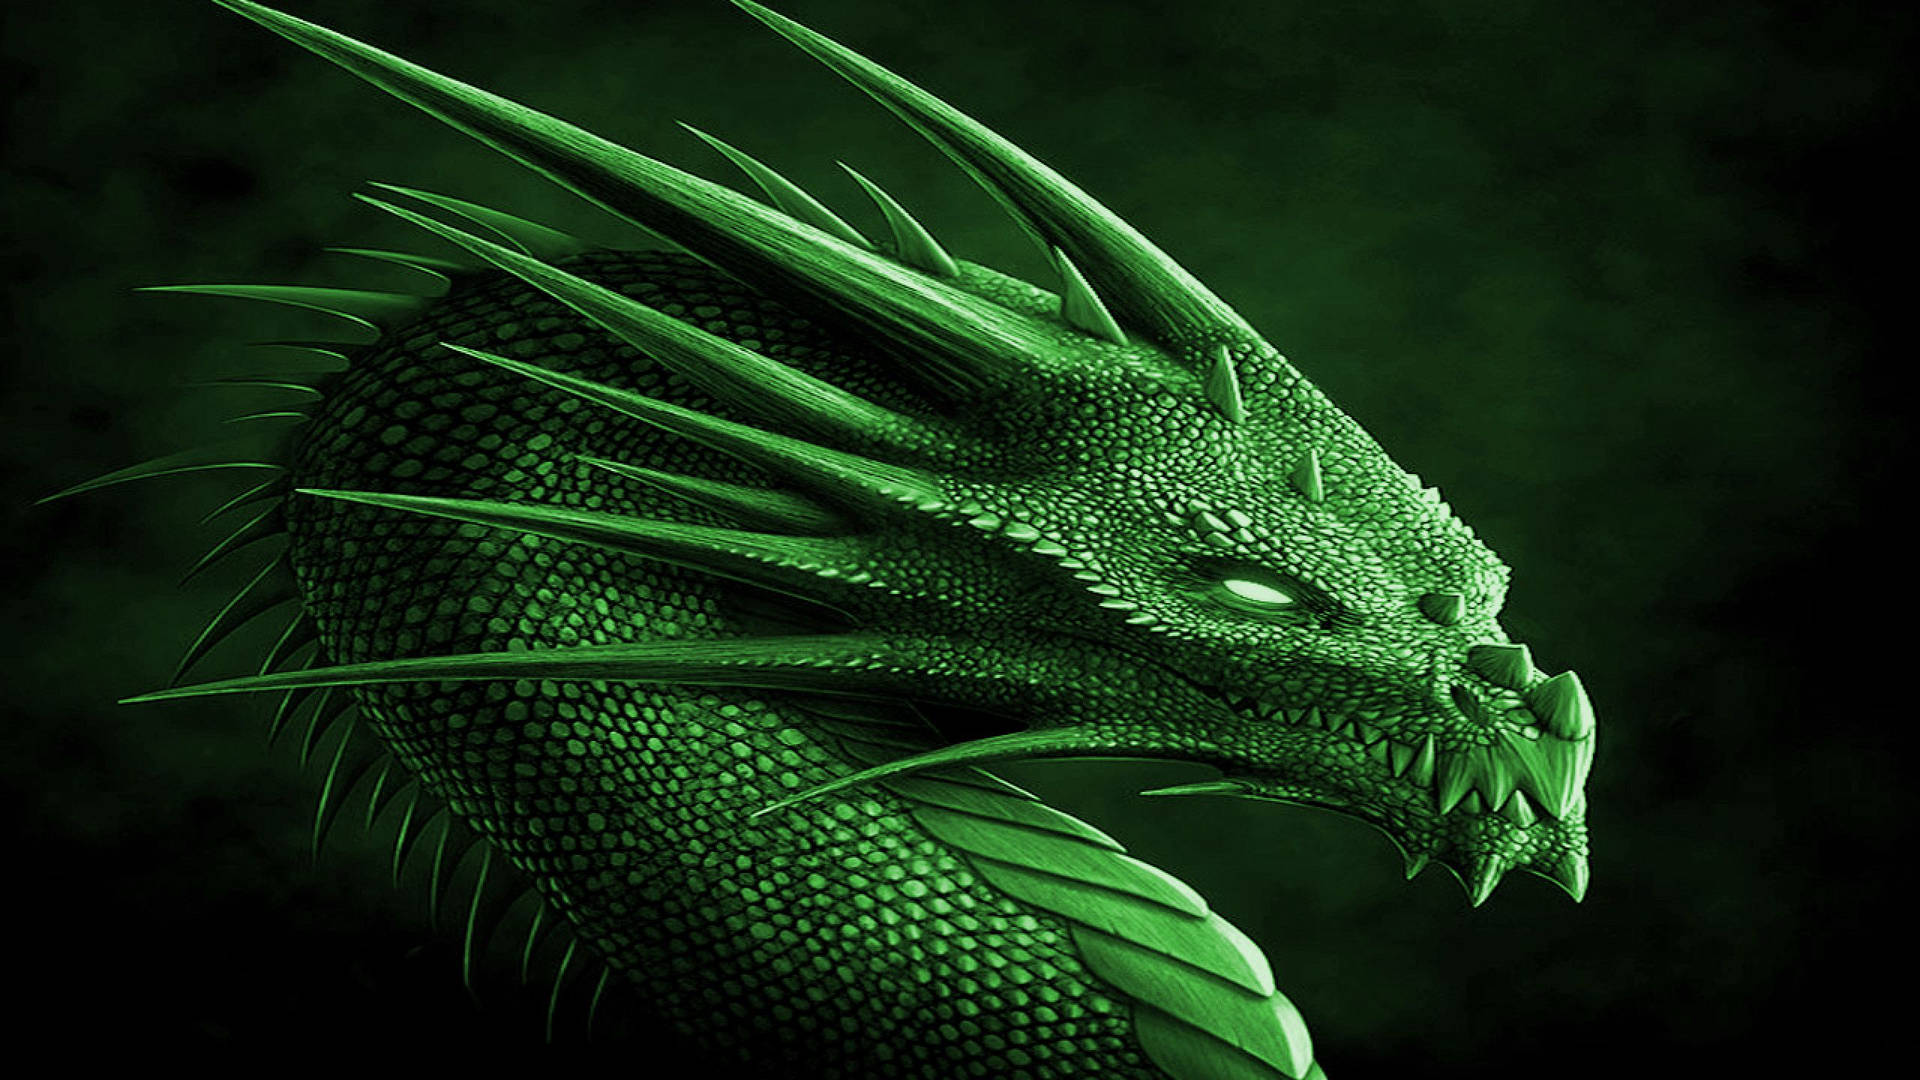 Vibrant Green Earth Dragon